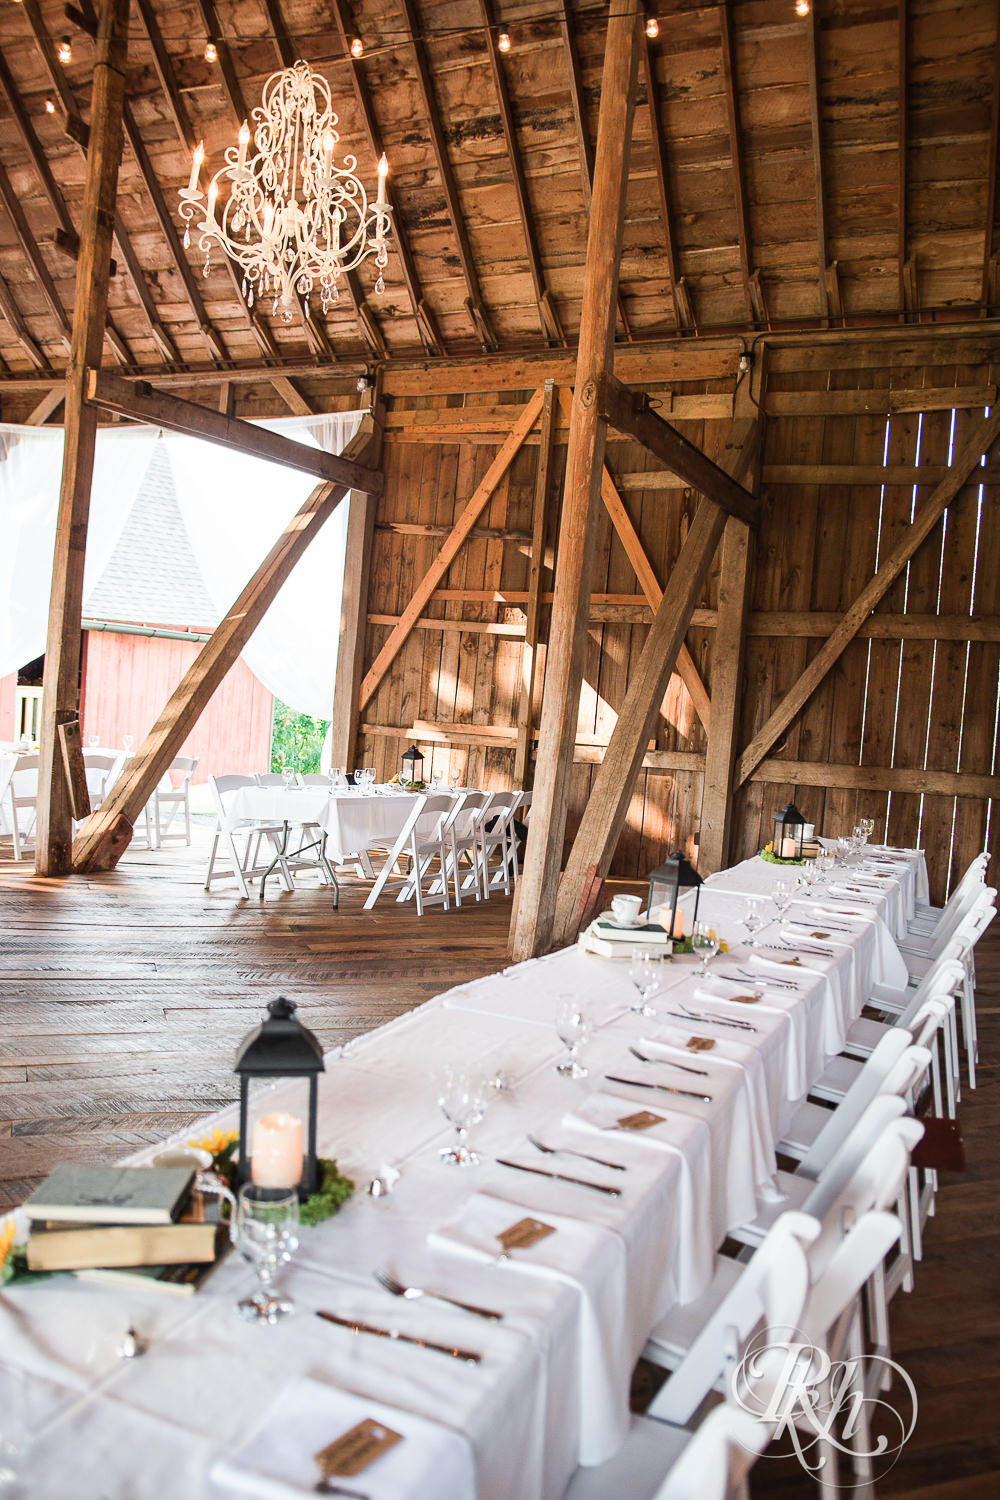 Outdoor barn wedding reception setup at Birch Hill Barn in Glenwood City, Wisconsin.